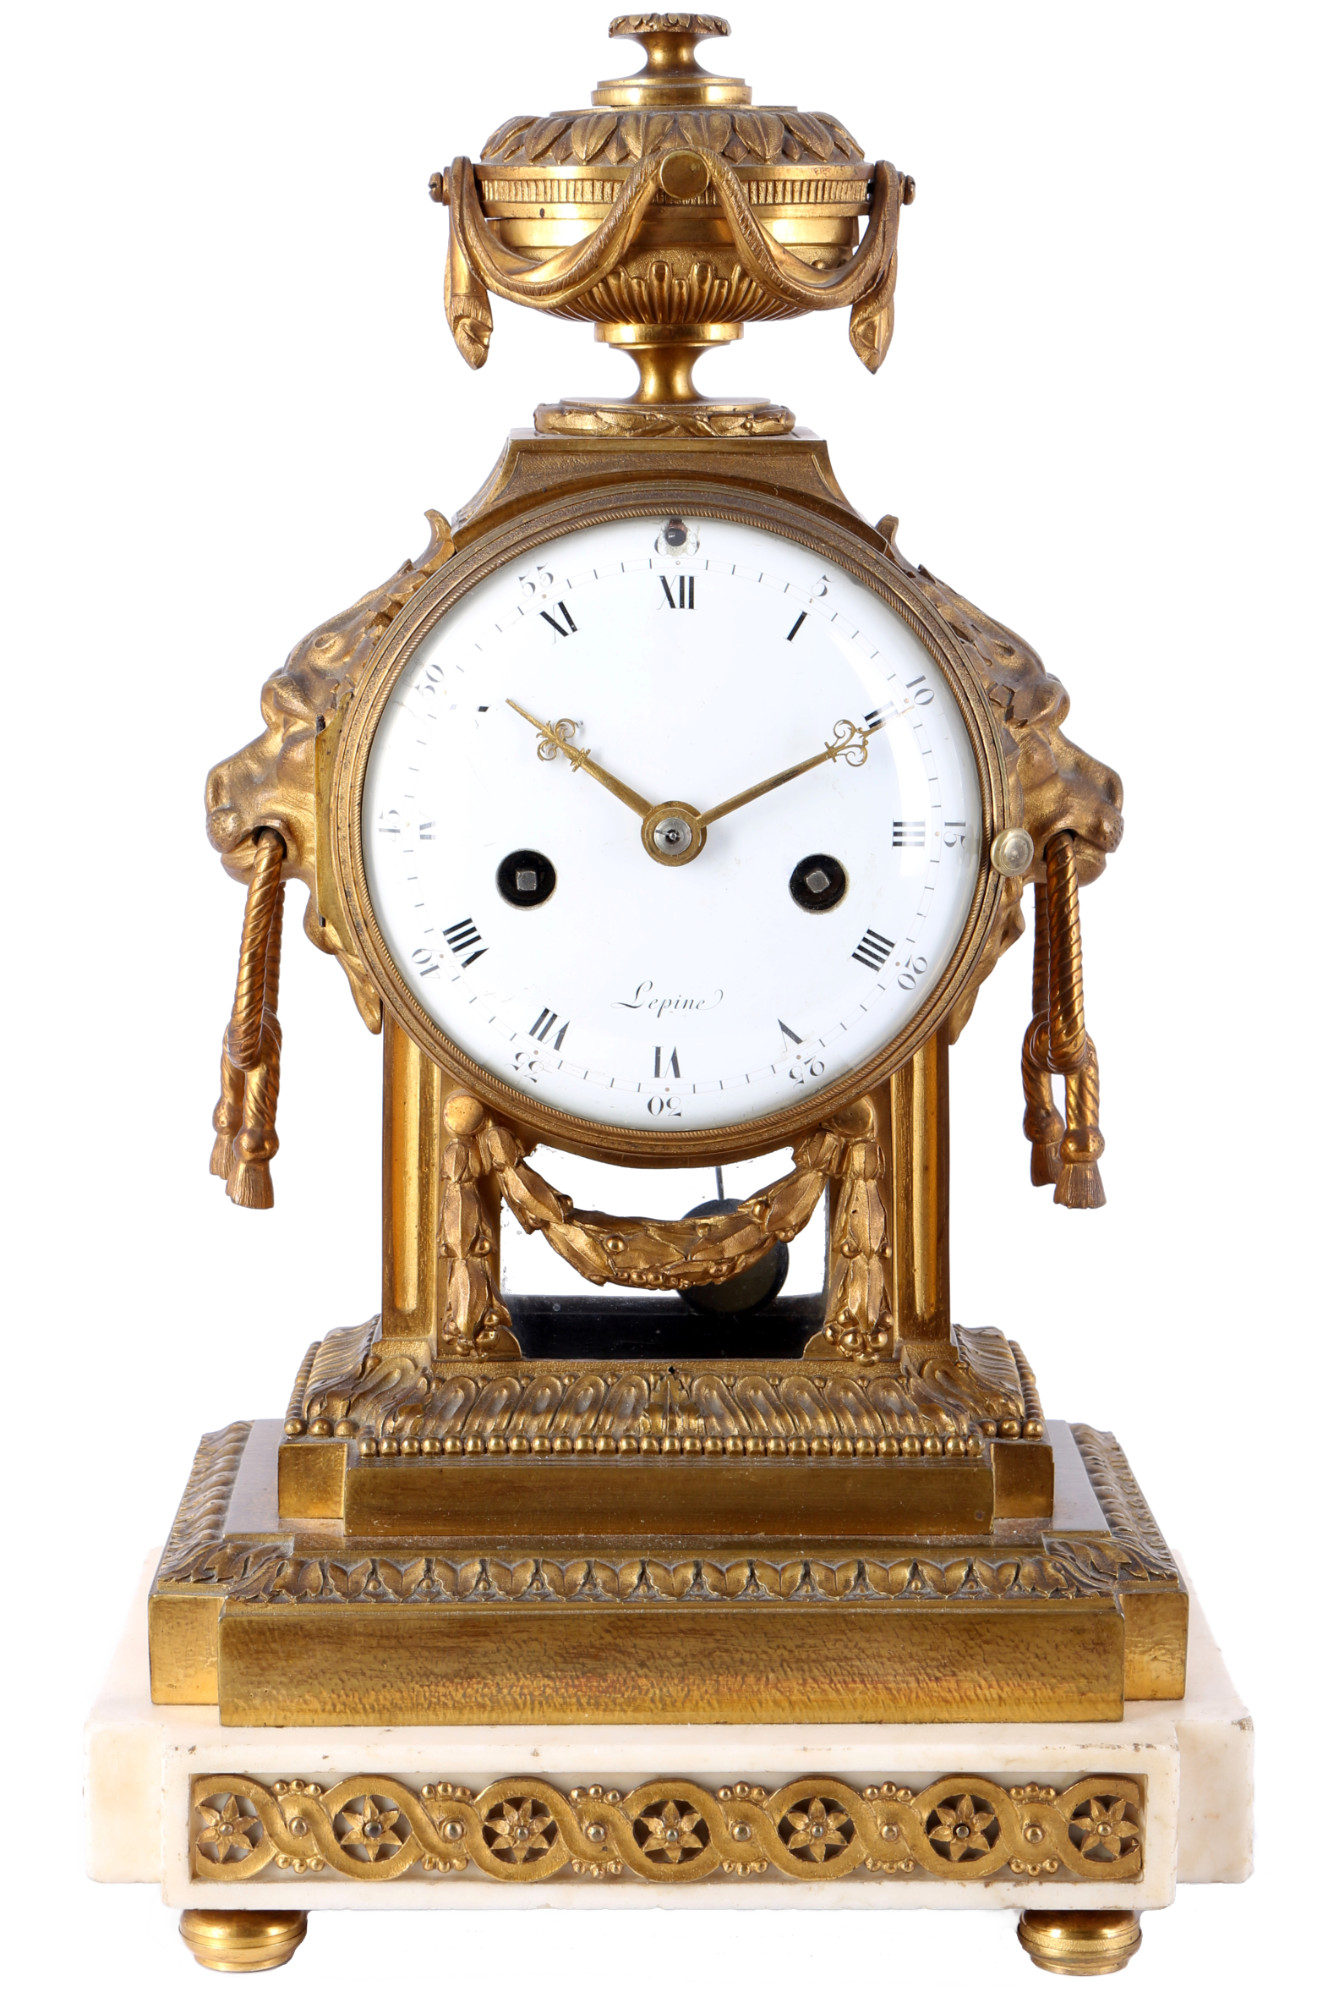 French mantel clock 18th century, Kaminuhr, Frankreich 18. Jahrhundert,